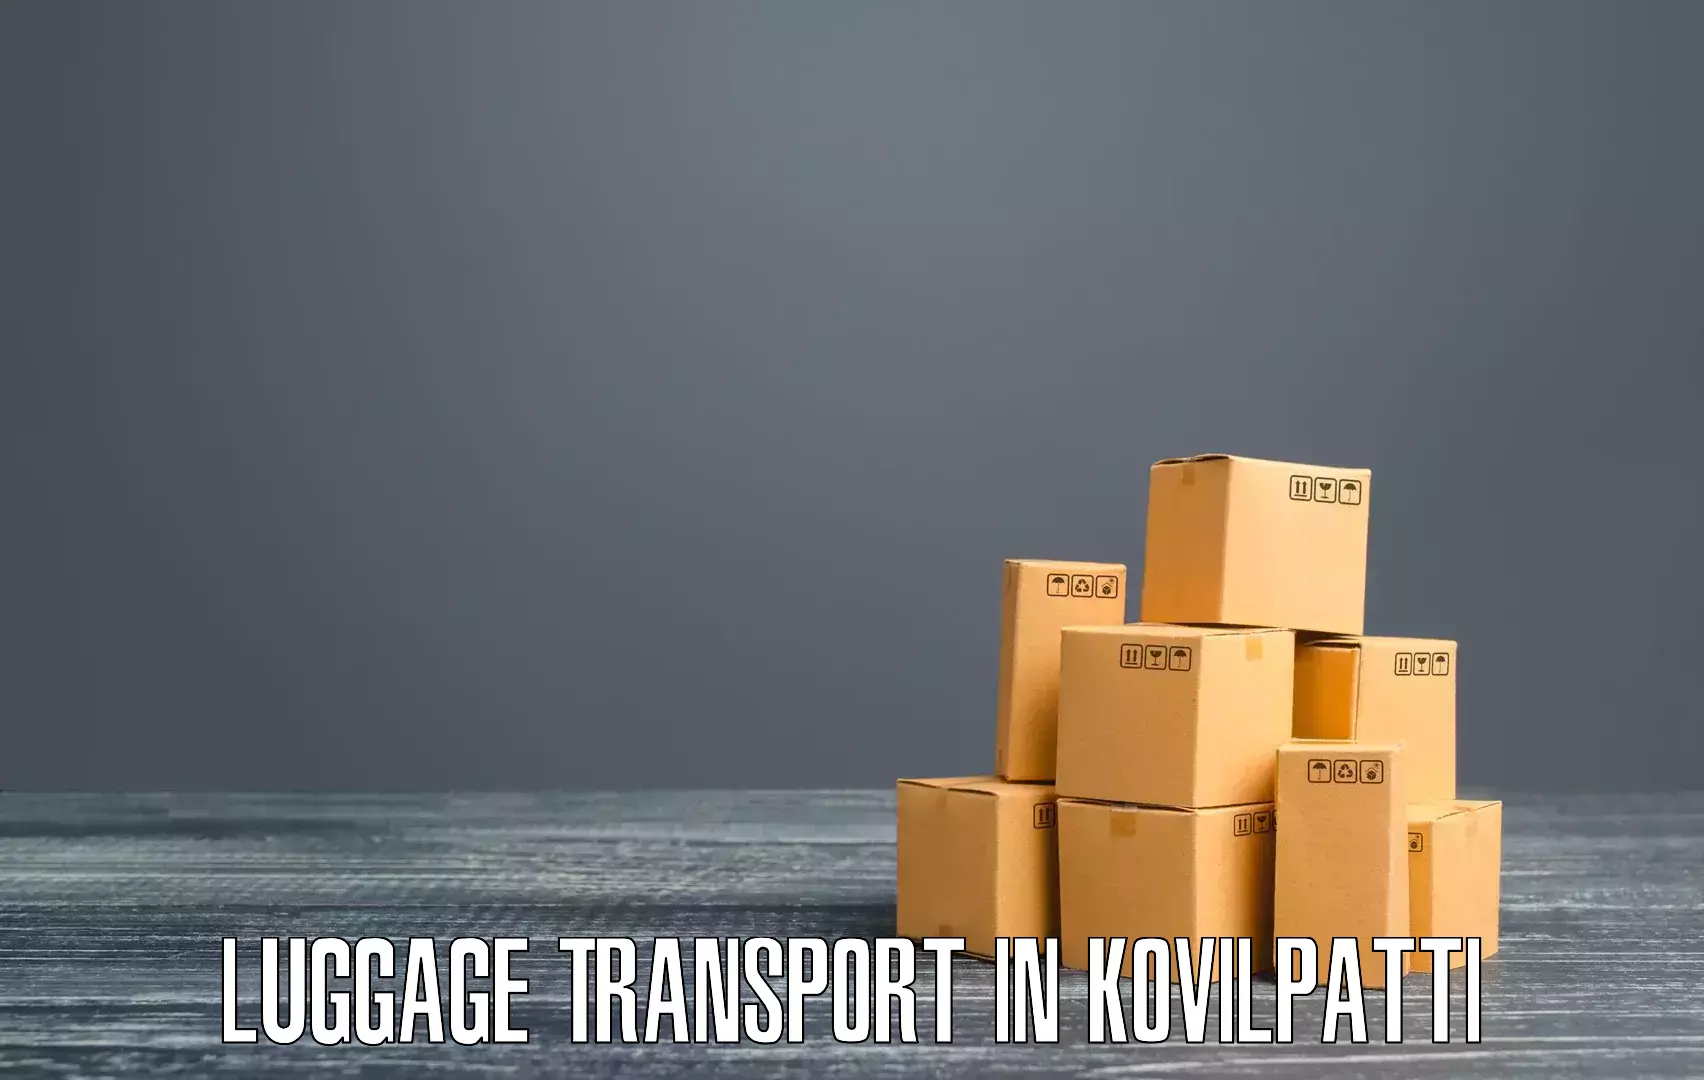 Luggage transport deals in Kovilpatti